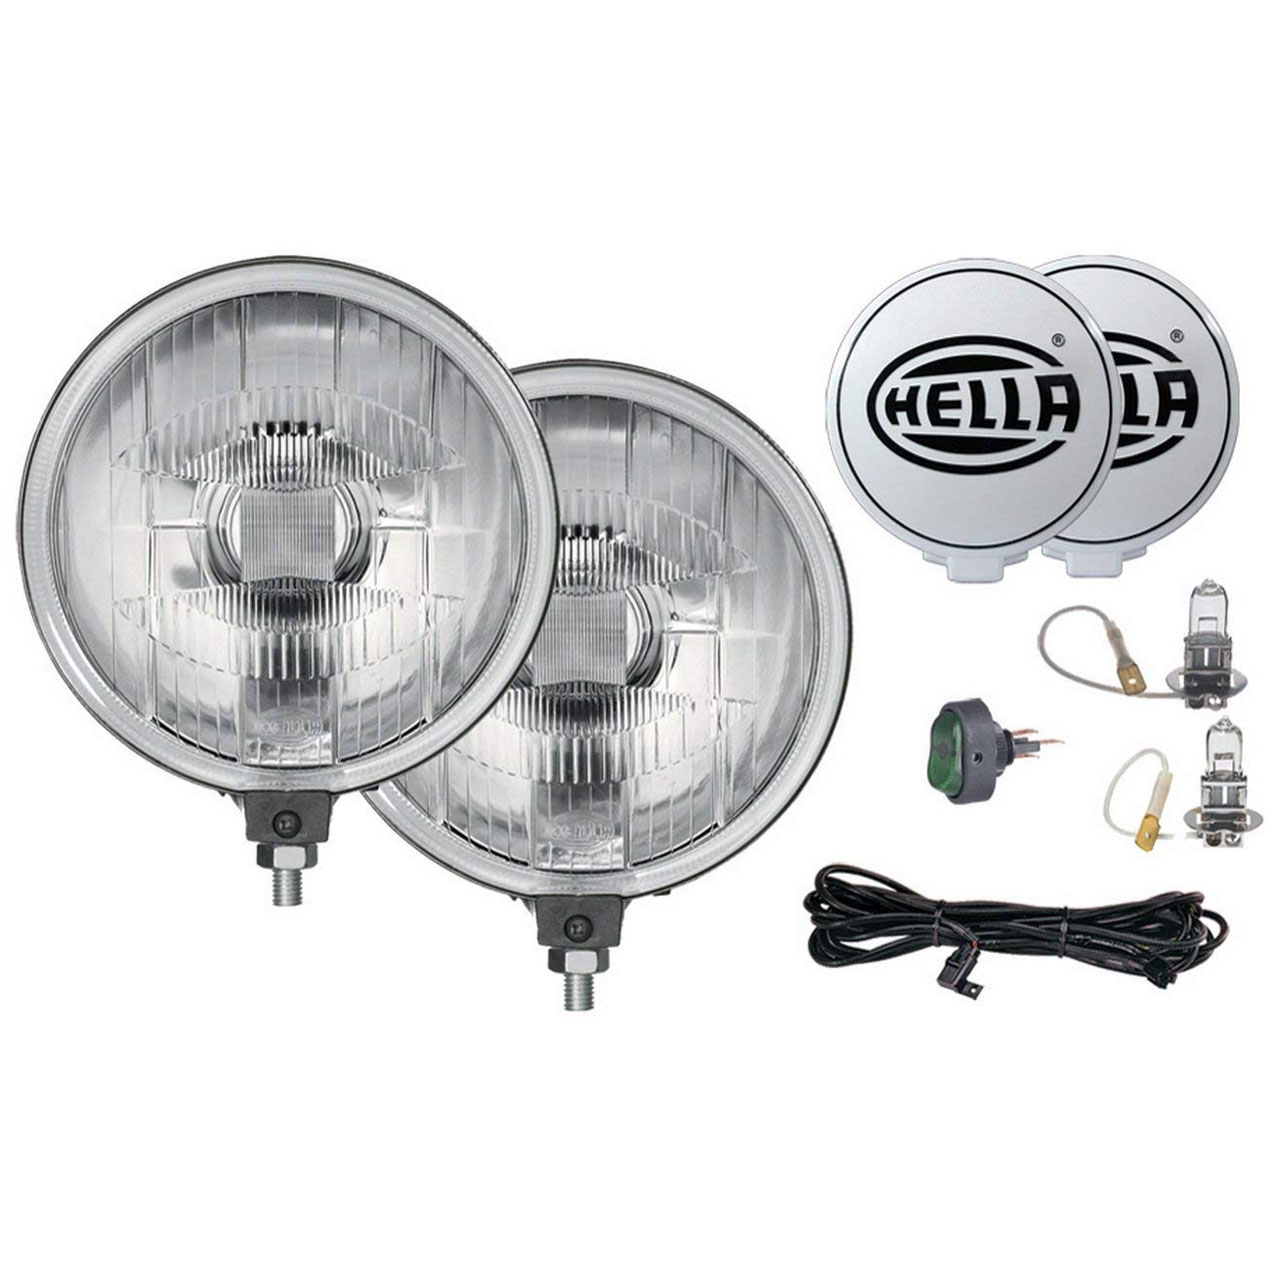 Hella  500 Series 12V/55W Halogen Driving Lamp Kit #005750952